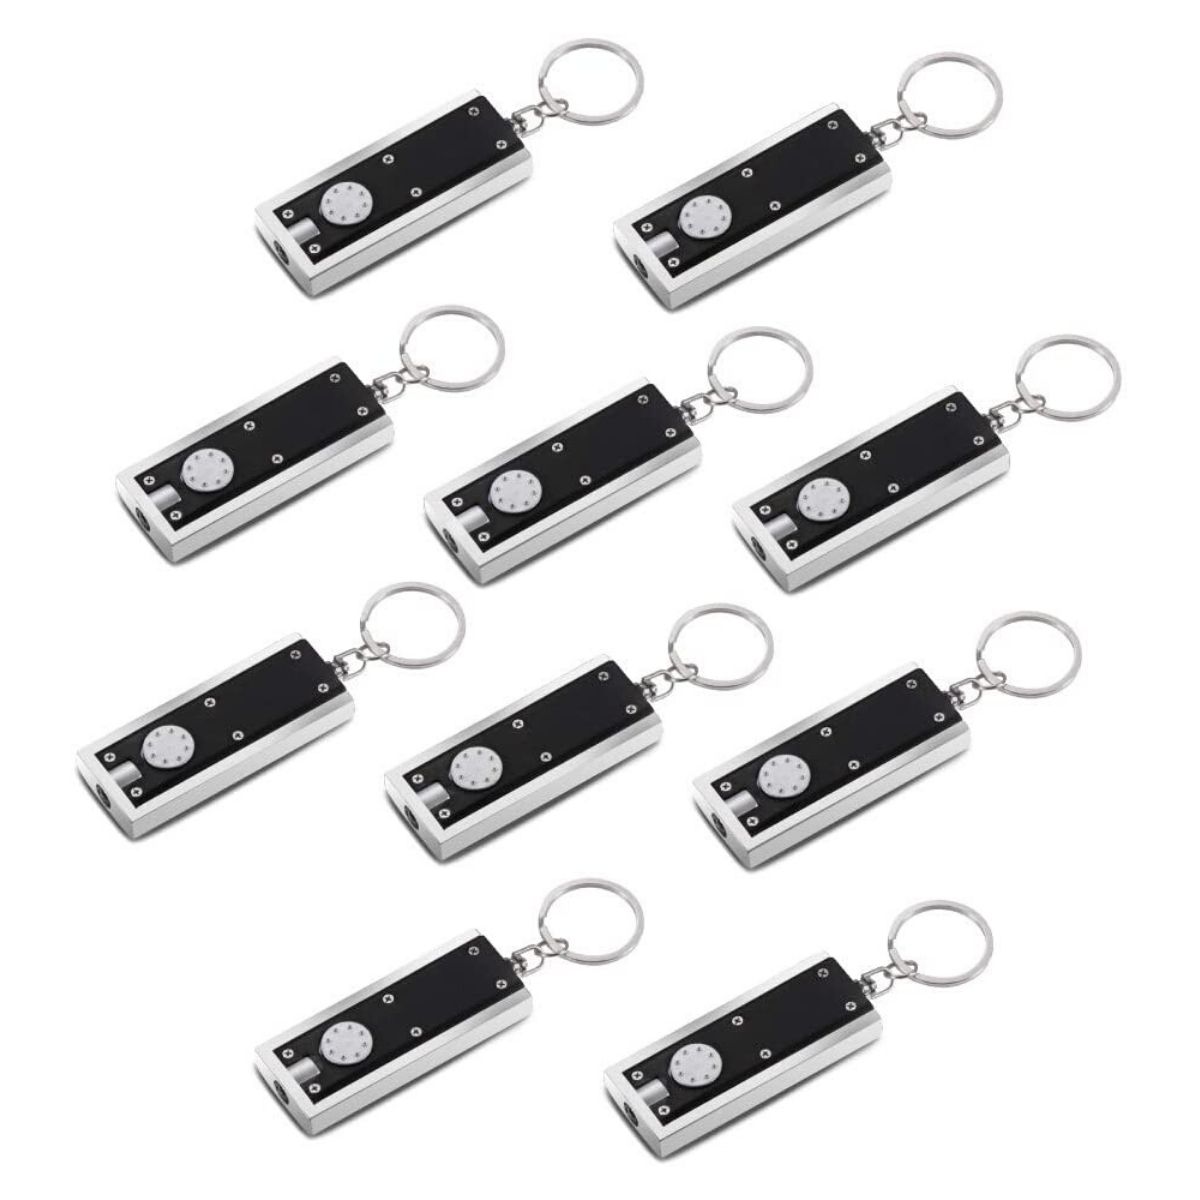 The Best Keychain Flashlight Option: Meco Mini Keychain Flashlight